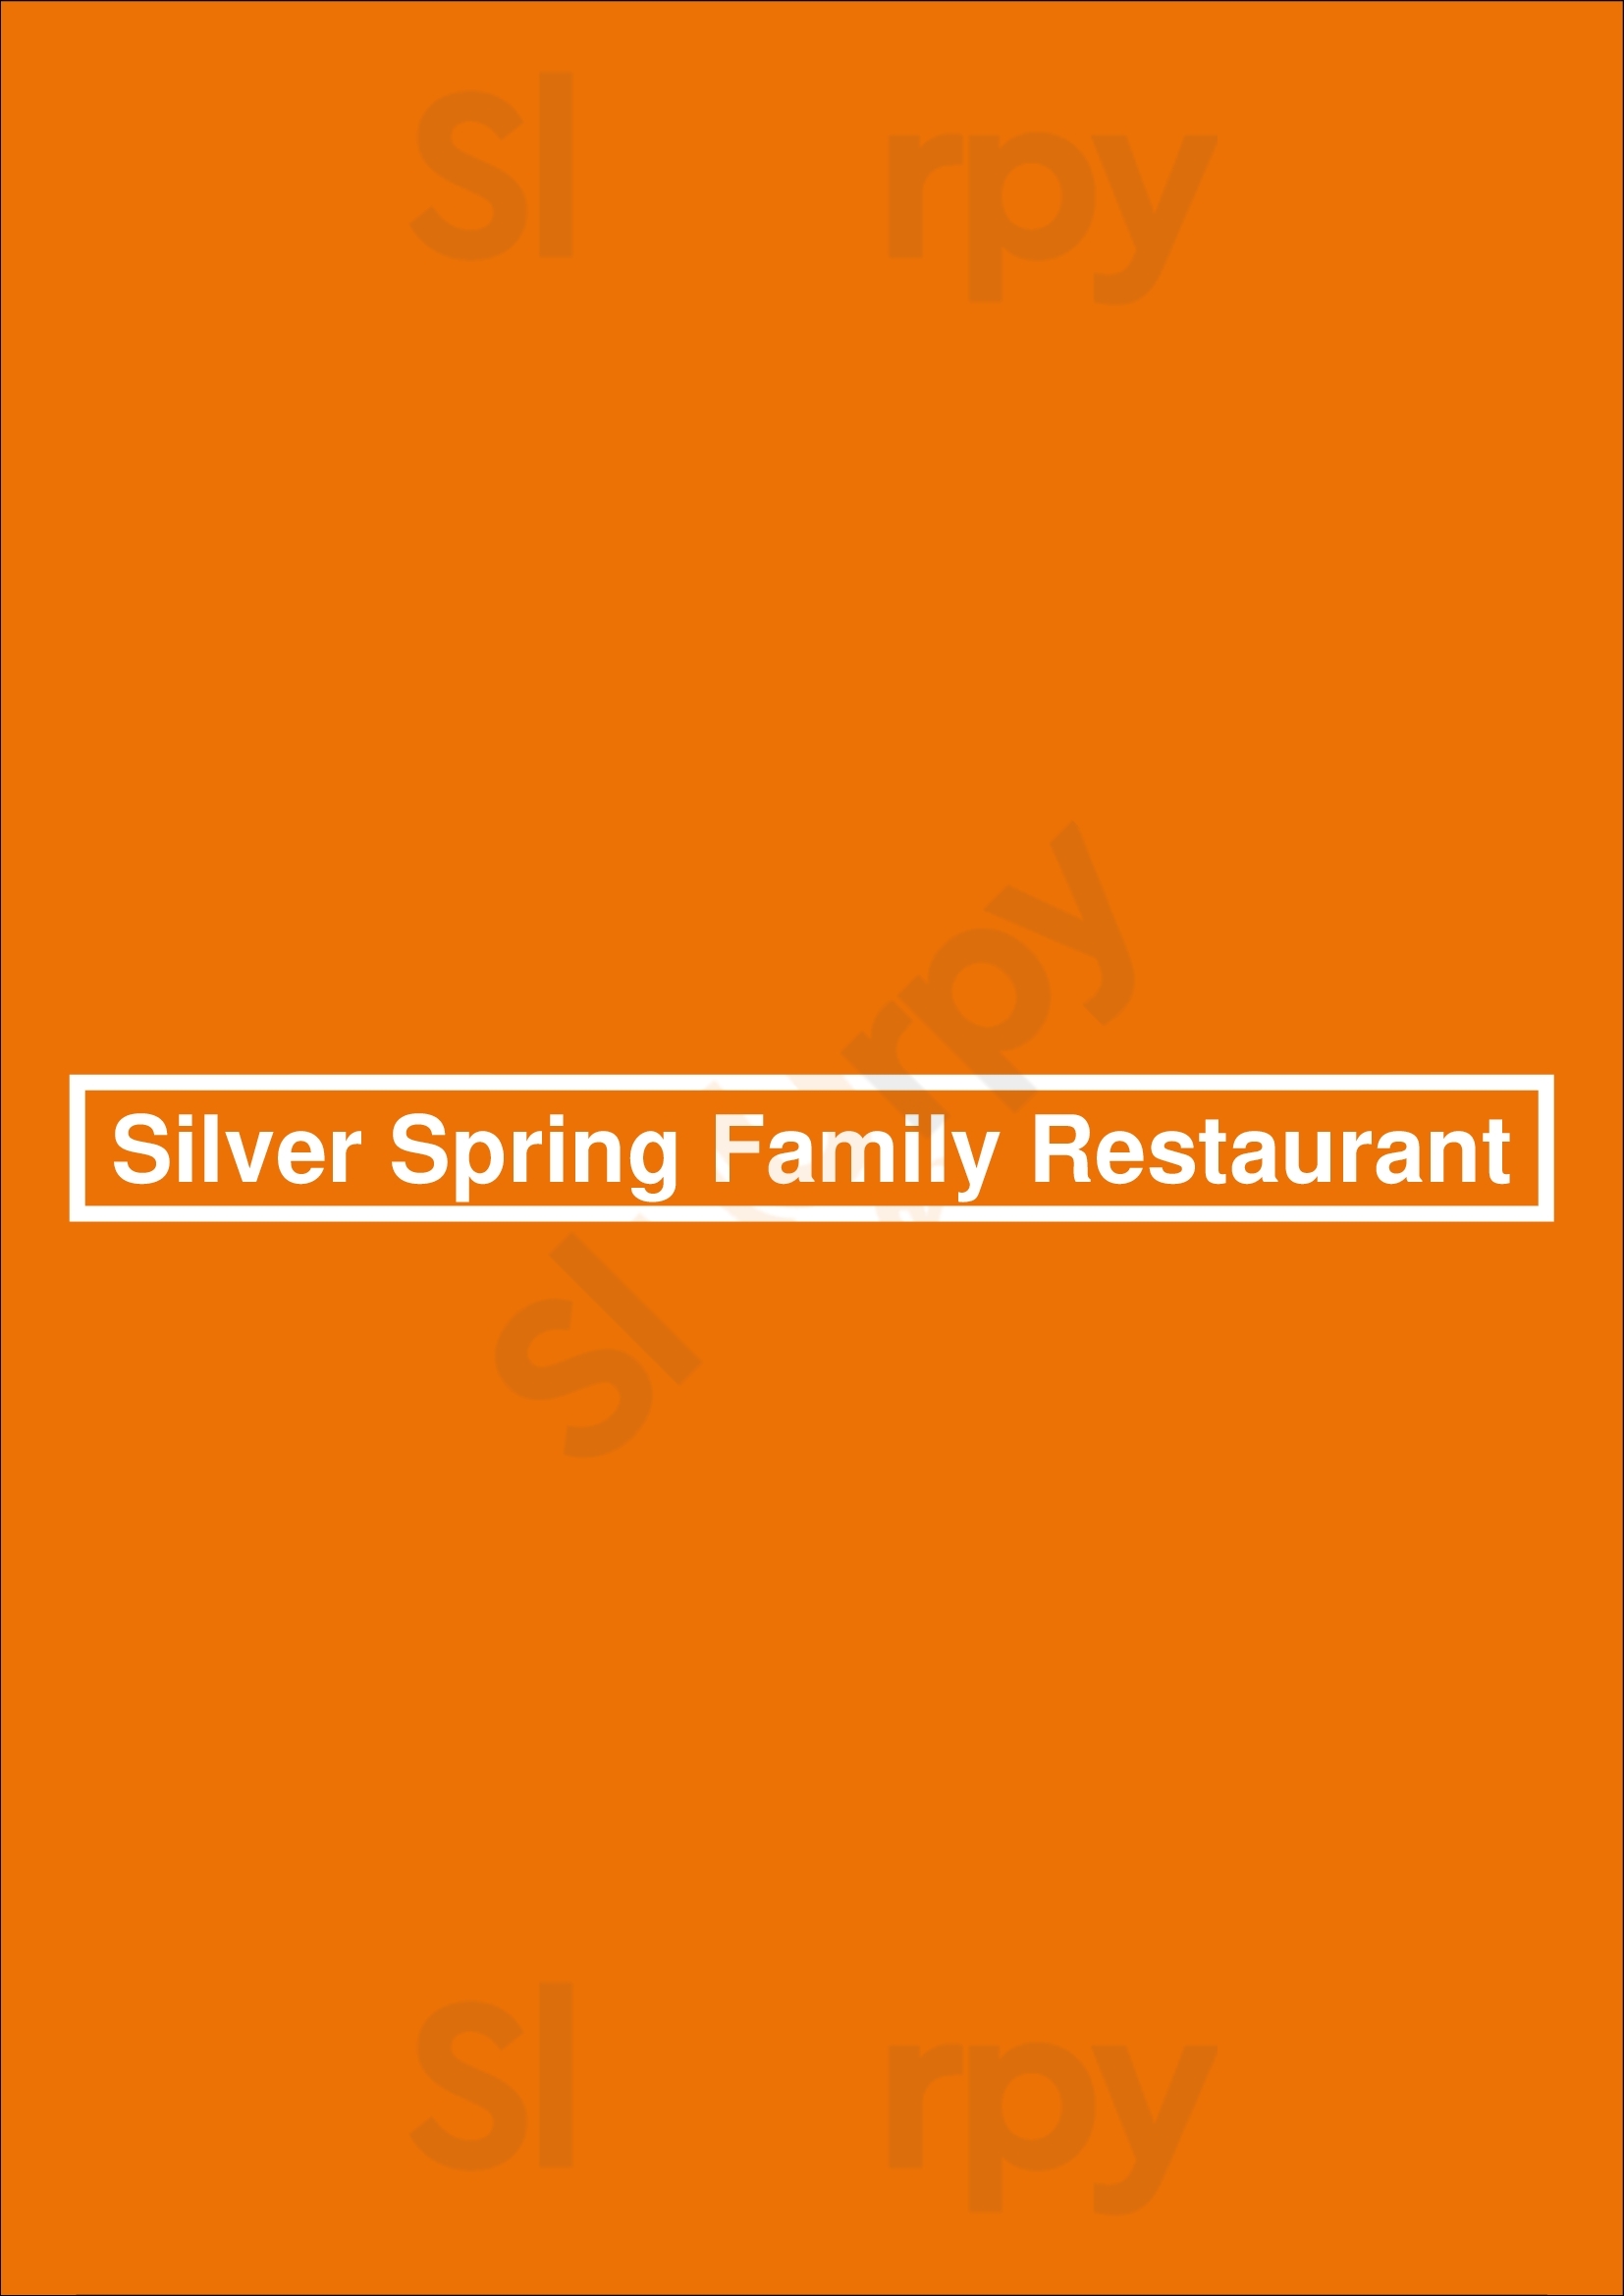 Silver Spring Family Restaurant Lancaster Menu - 1